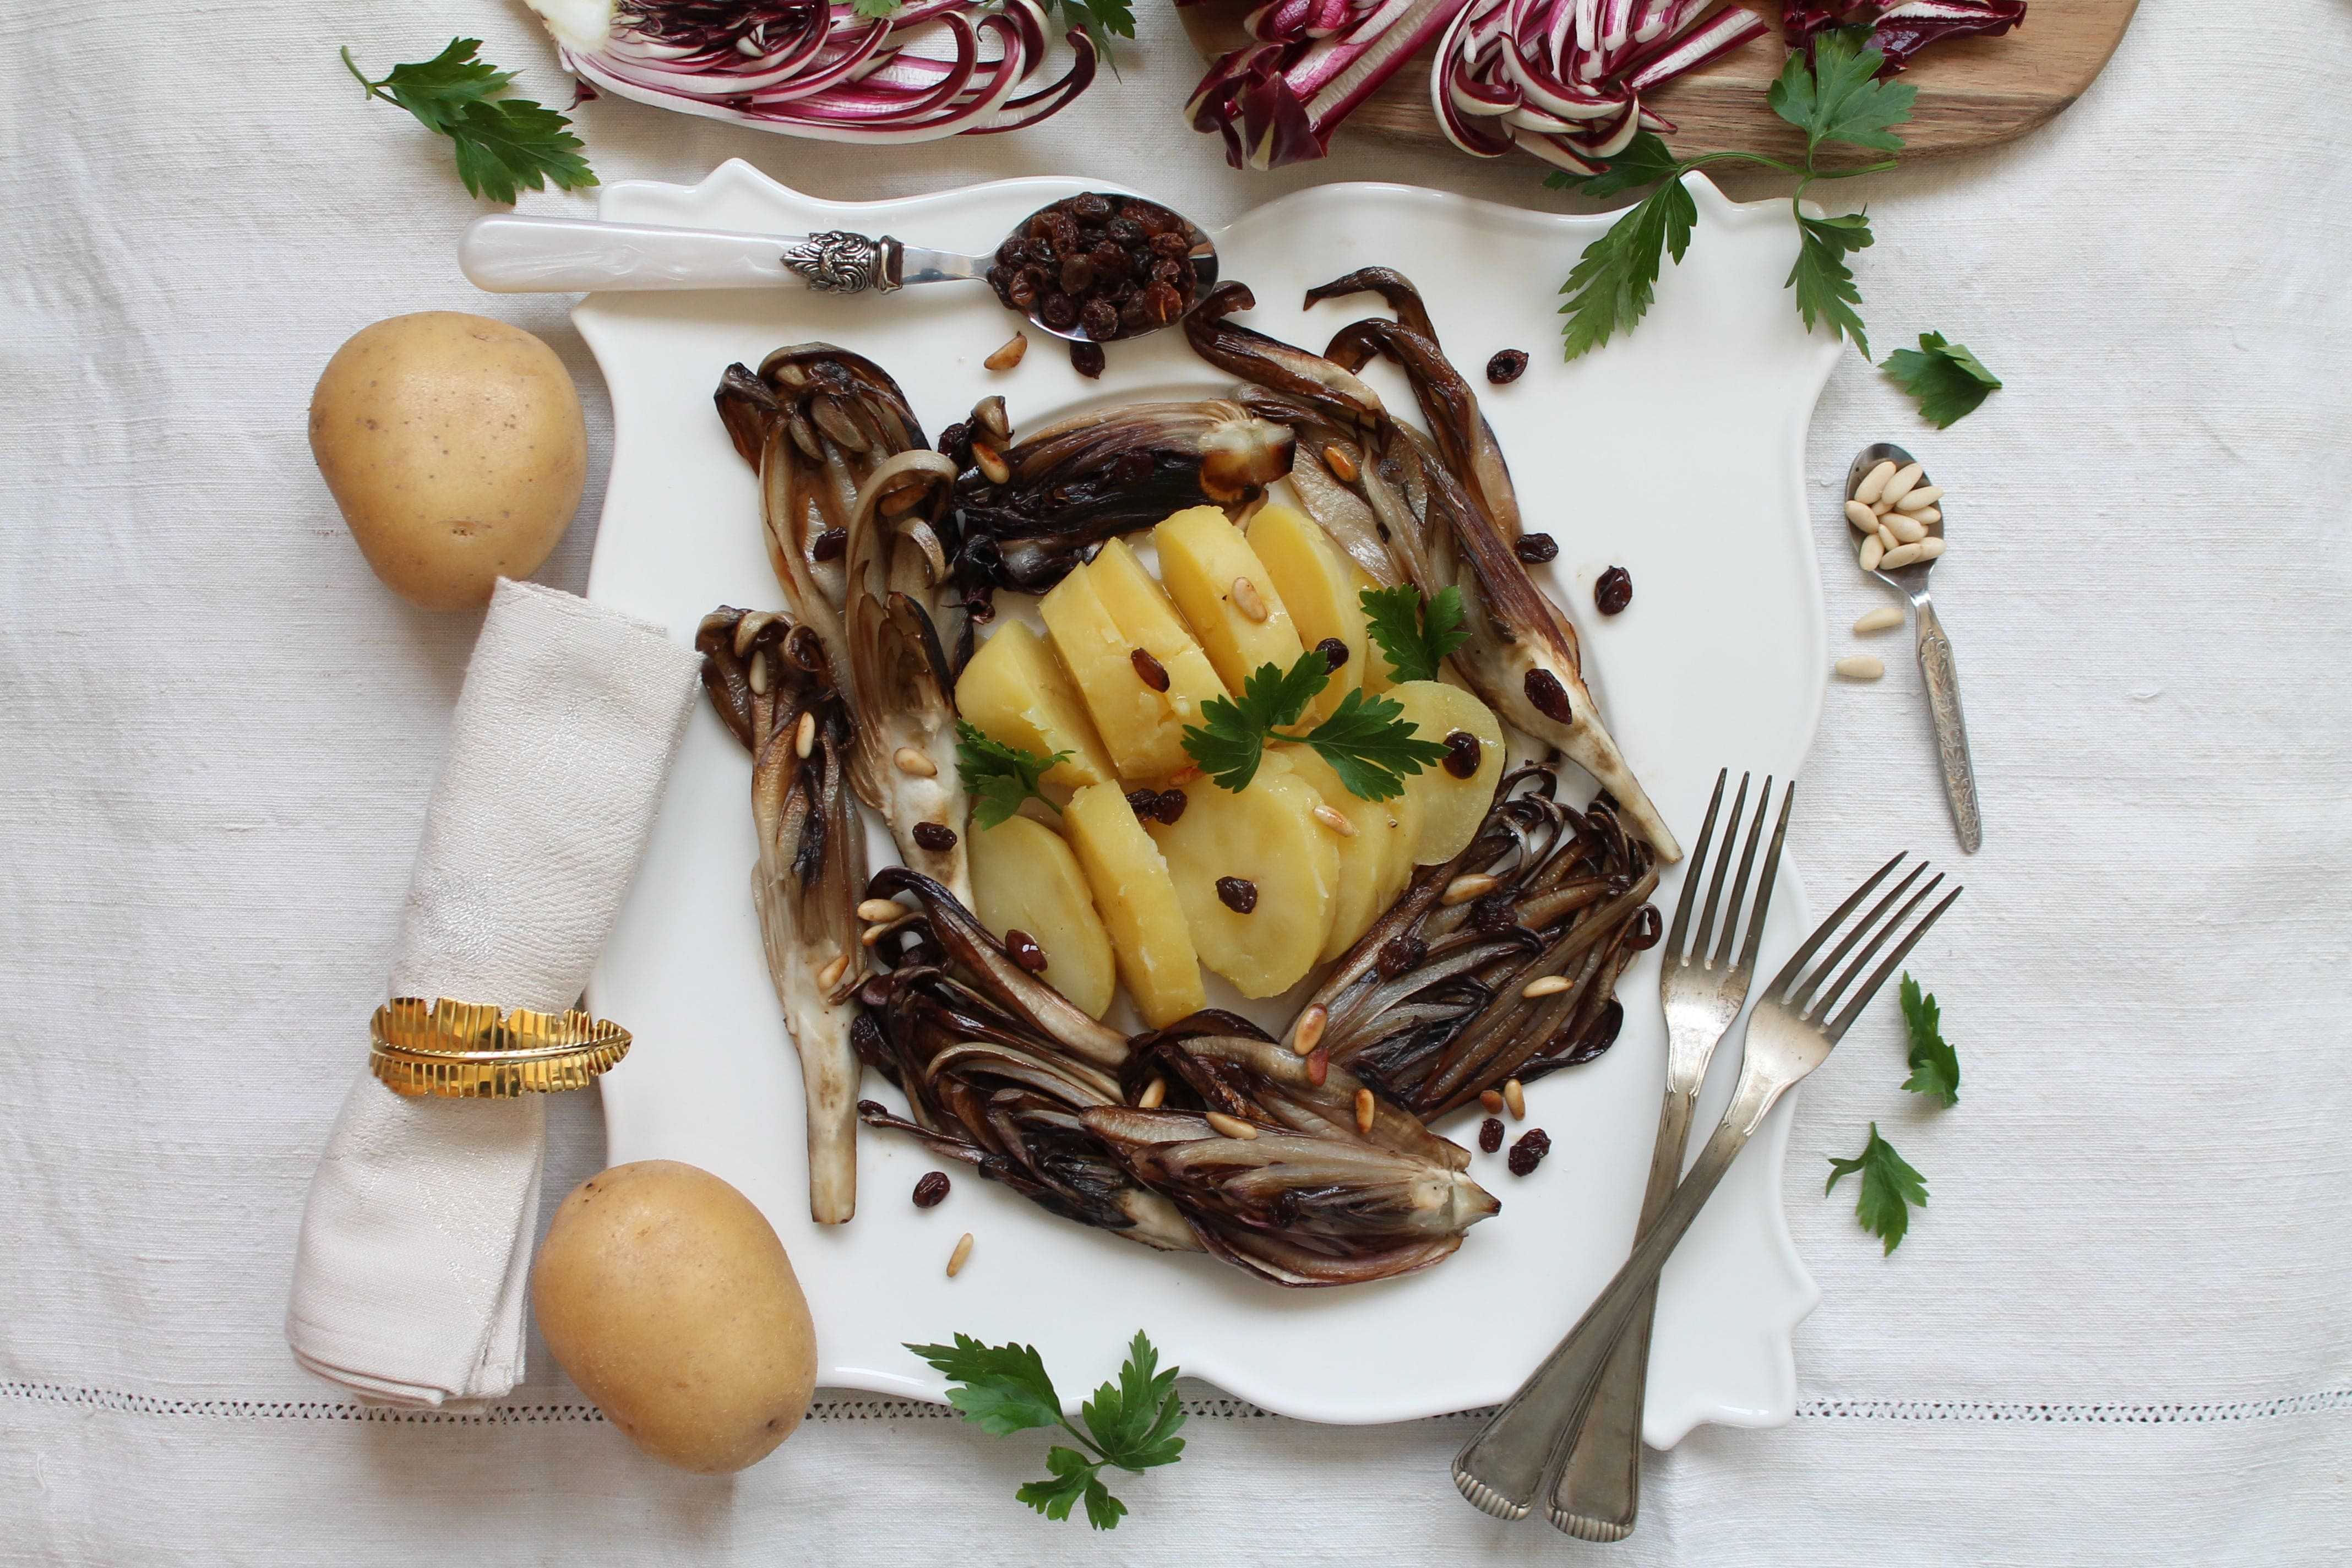 Potatoes with Treviso radicchio, pine nuts and raisins